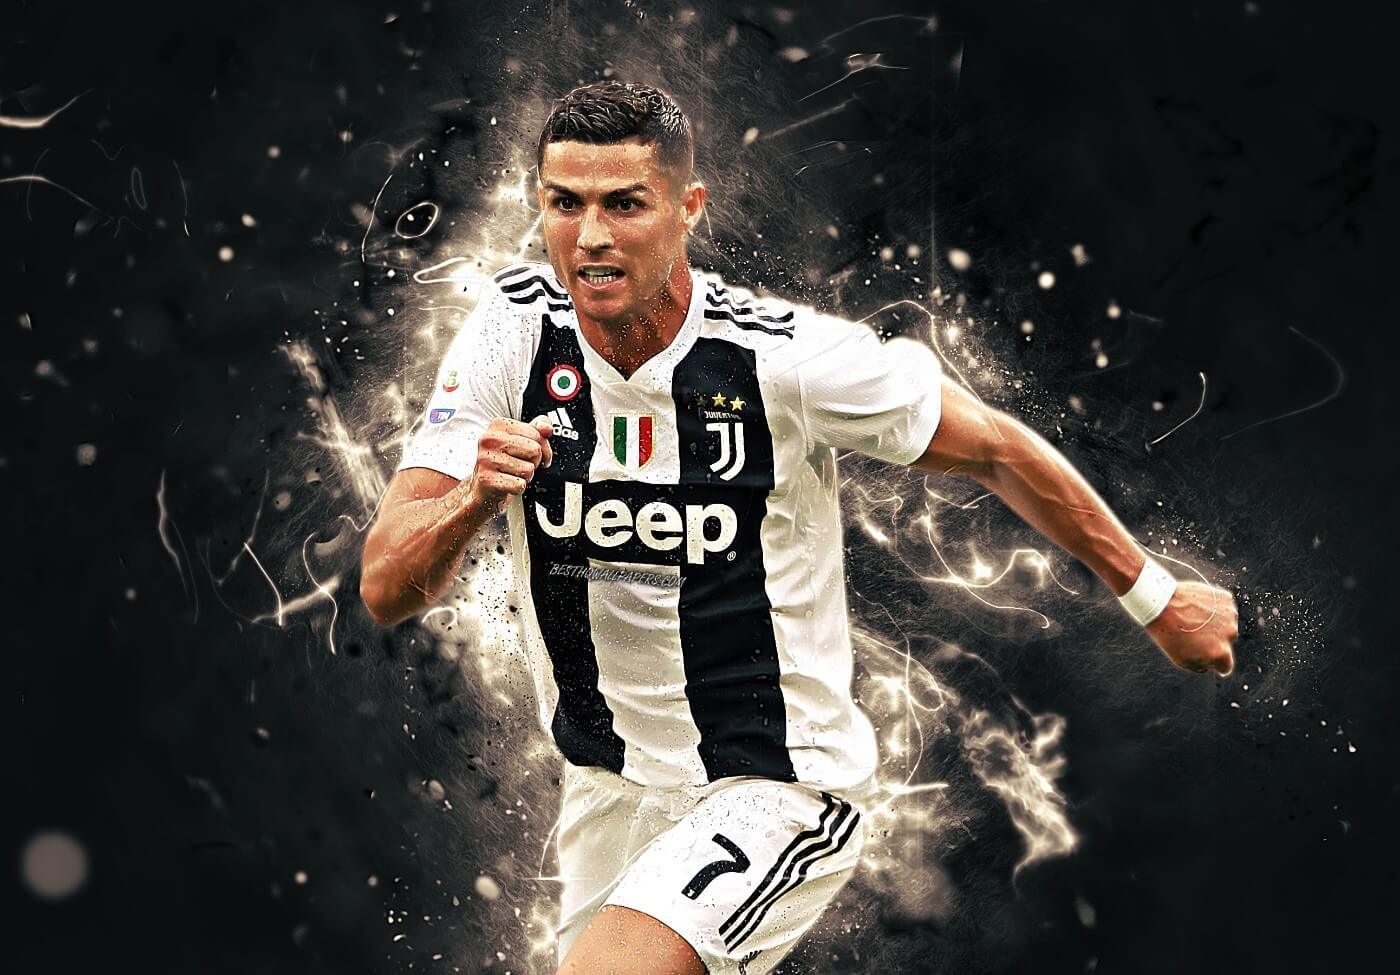 Cristiano Ronaldo Juventus poster & stampe di ArtMeme - Printler